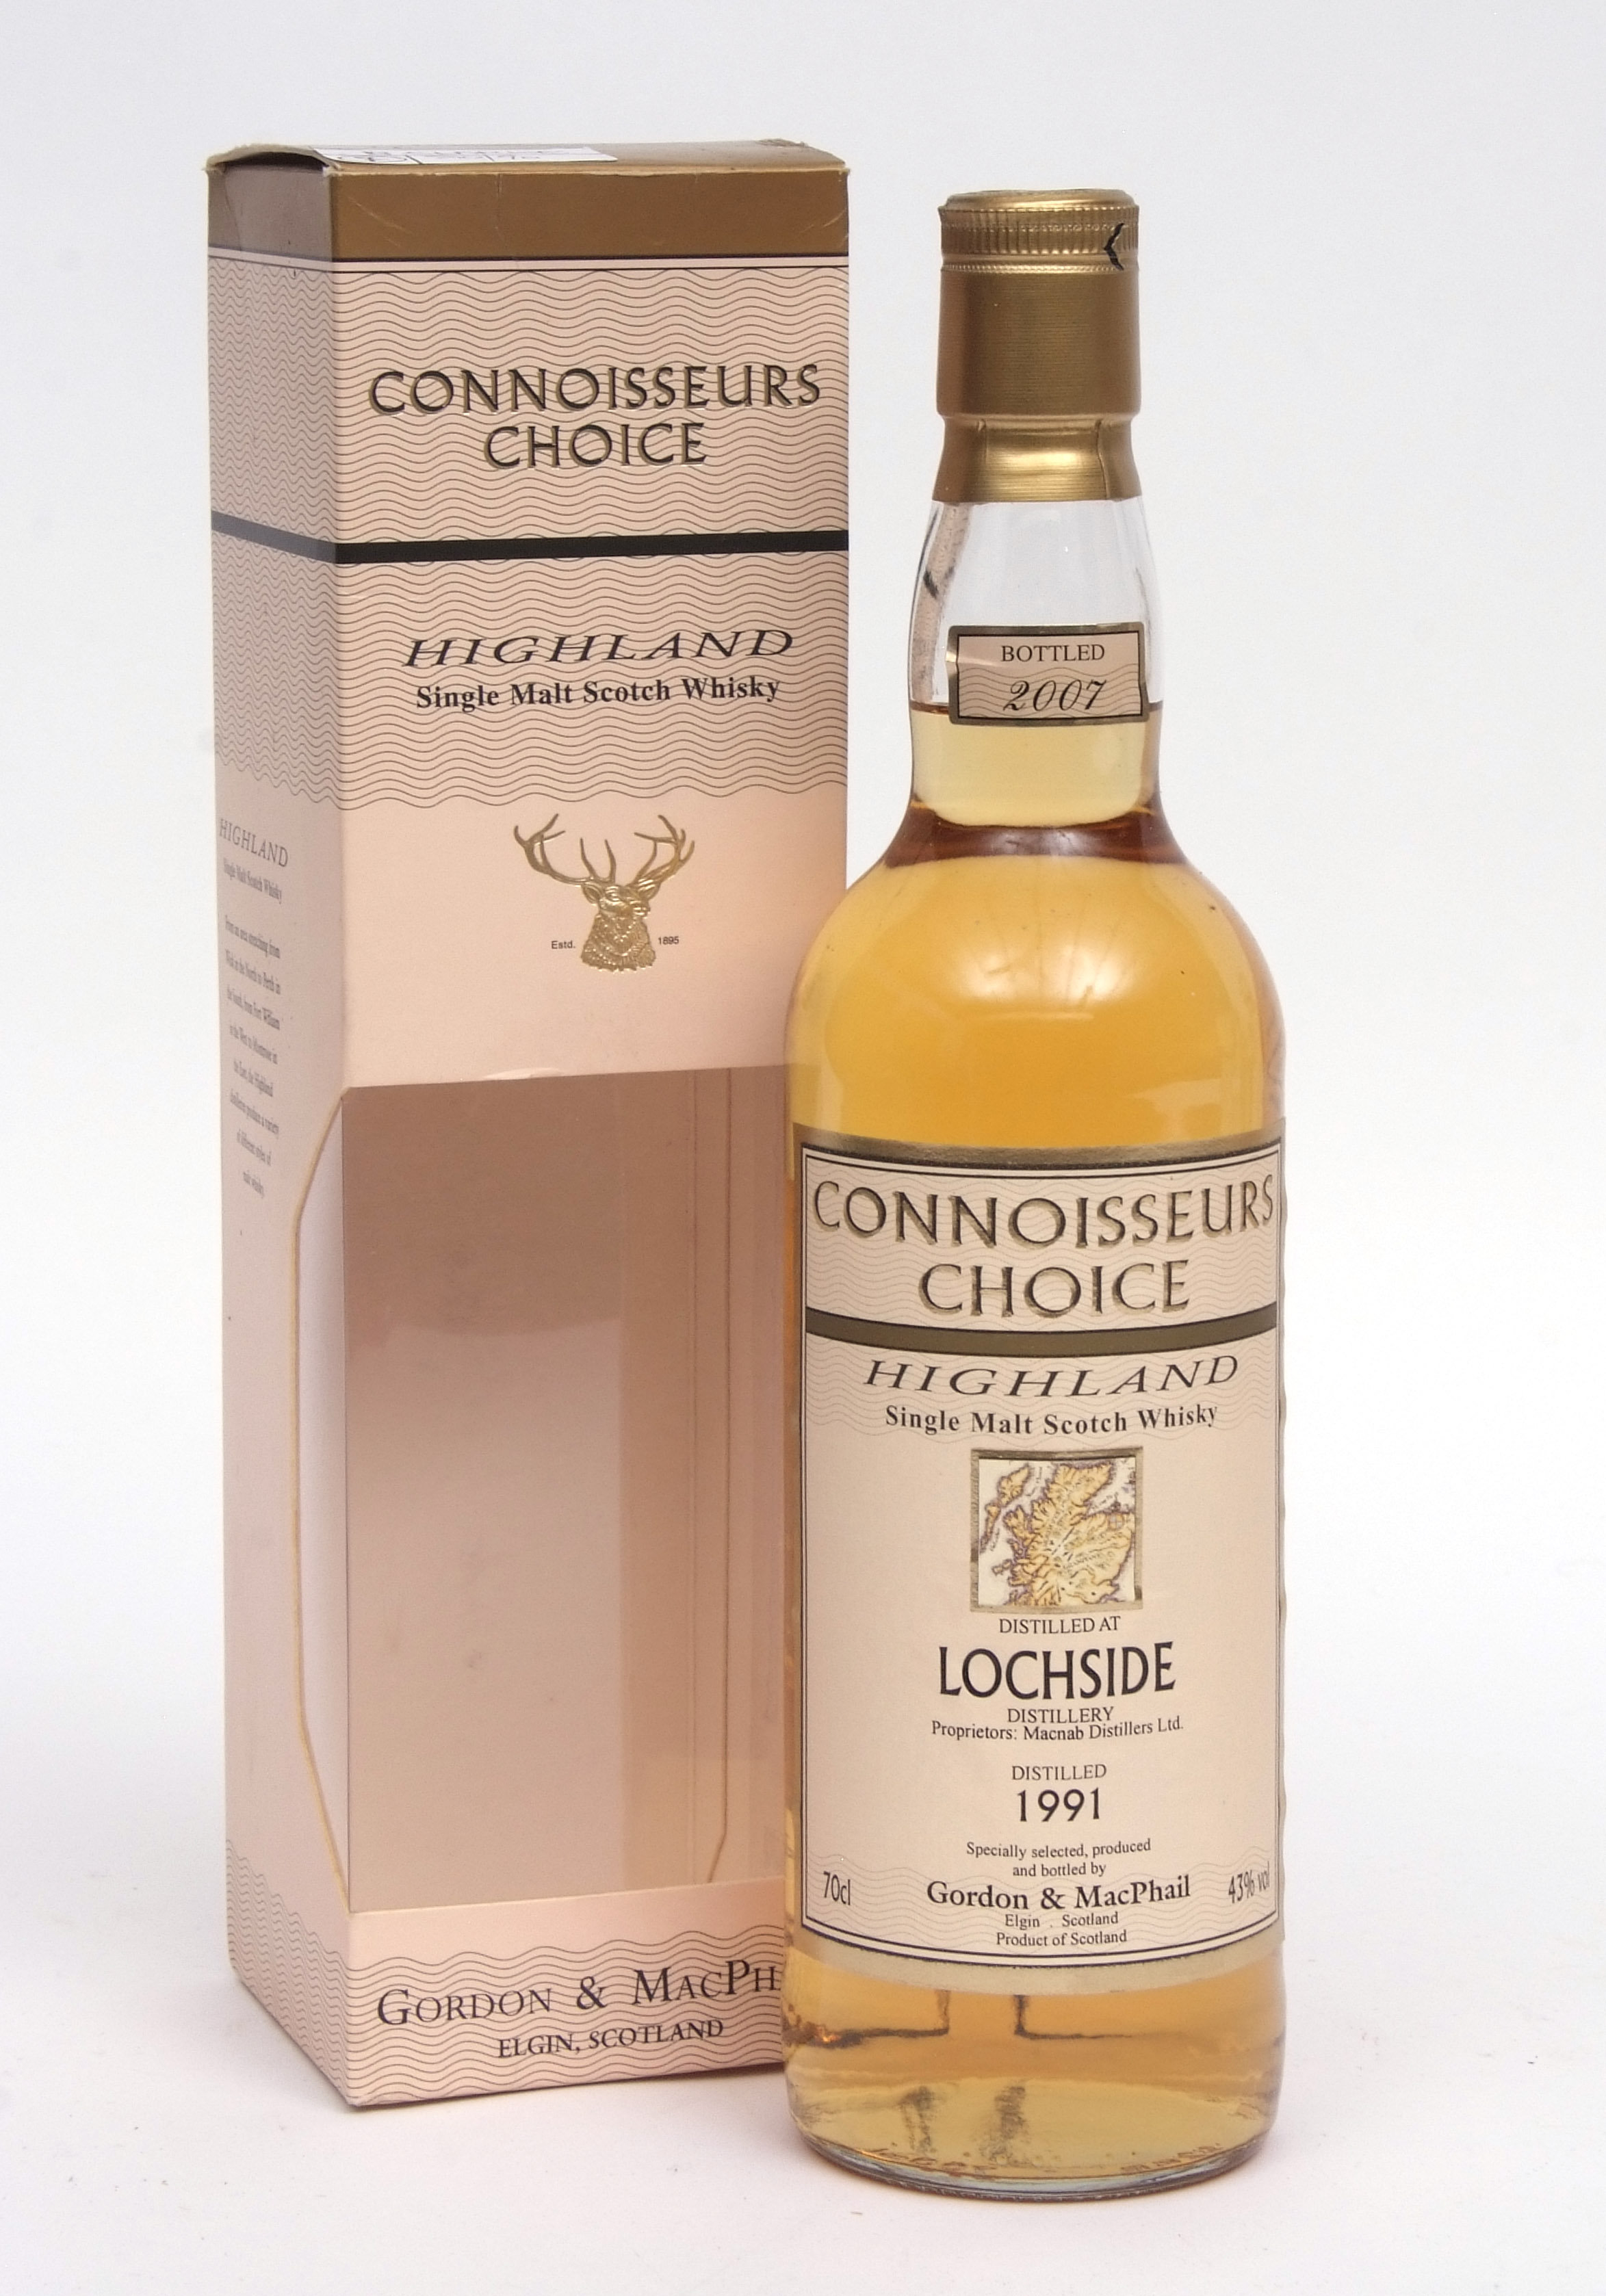 Lochside Highland single malt Scotch Whisky, Connoisseur's Choice by Gordon & McPhail, distilled